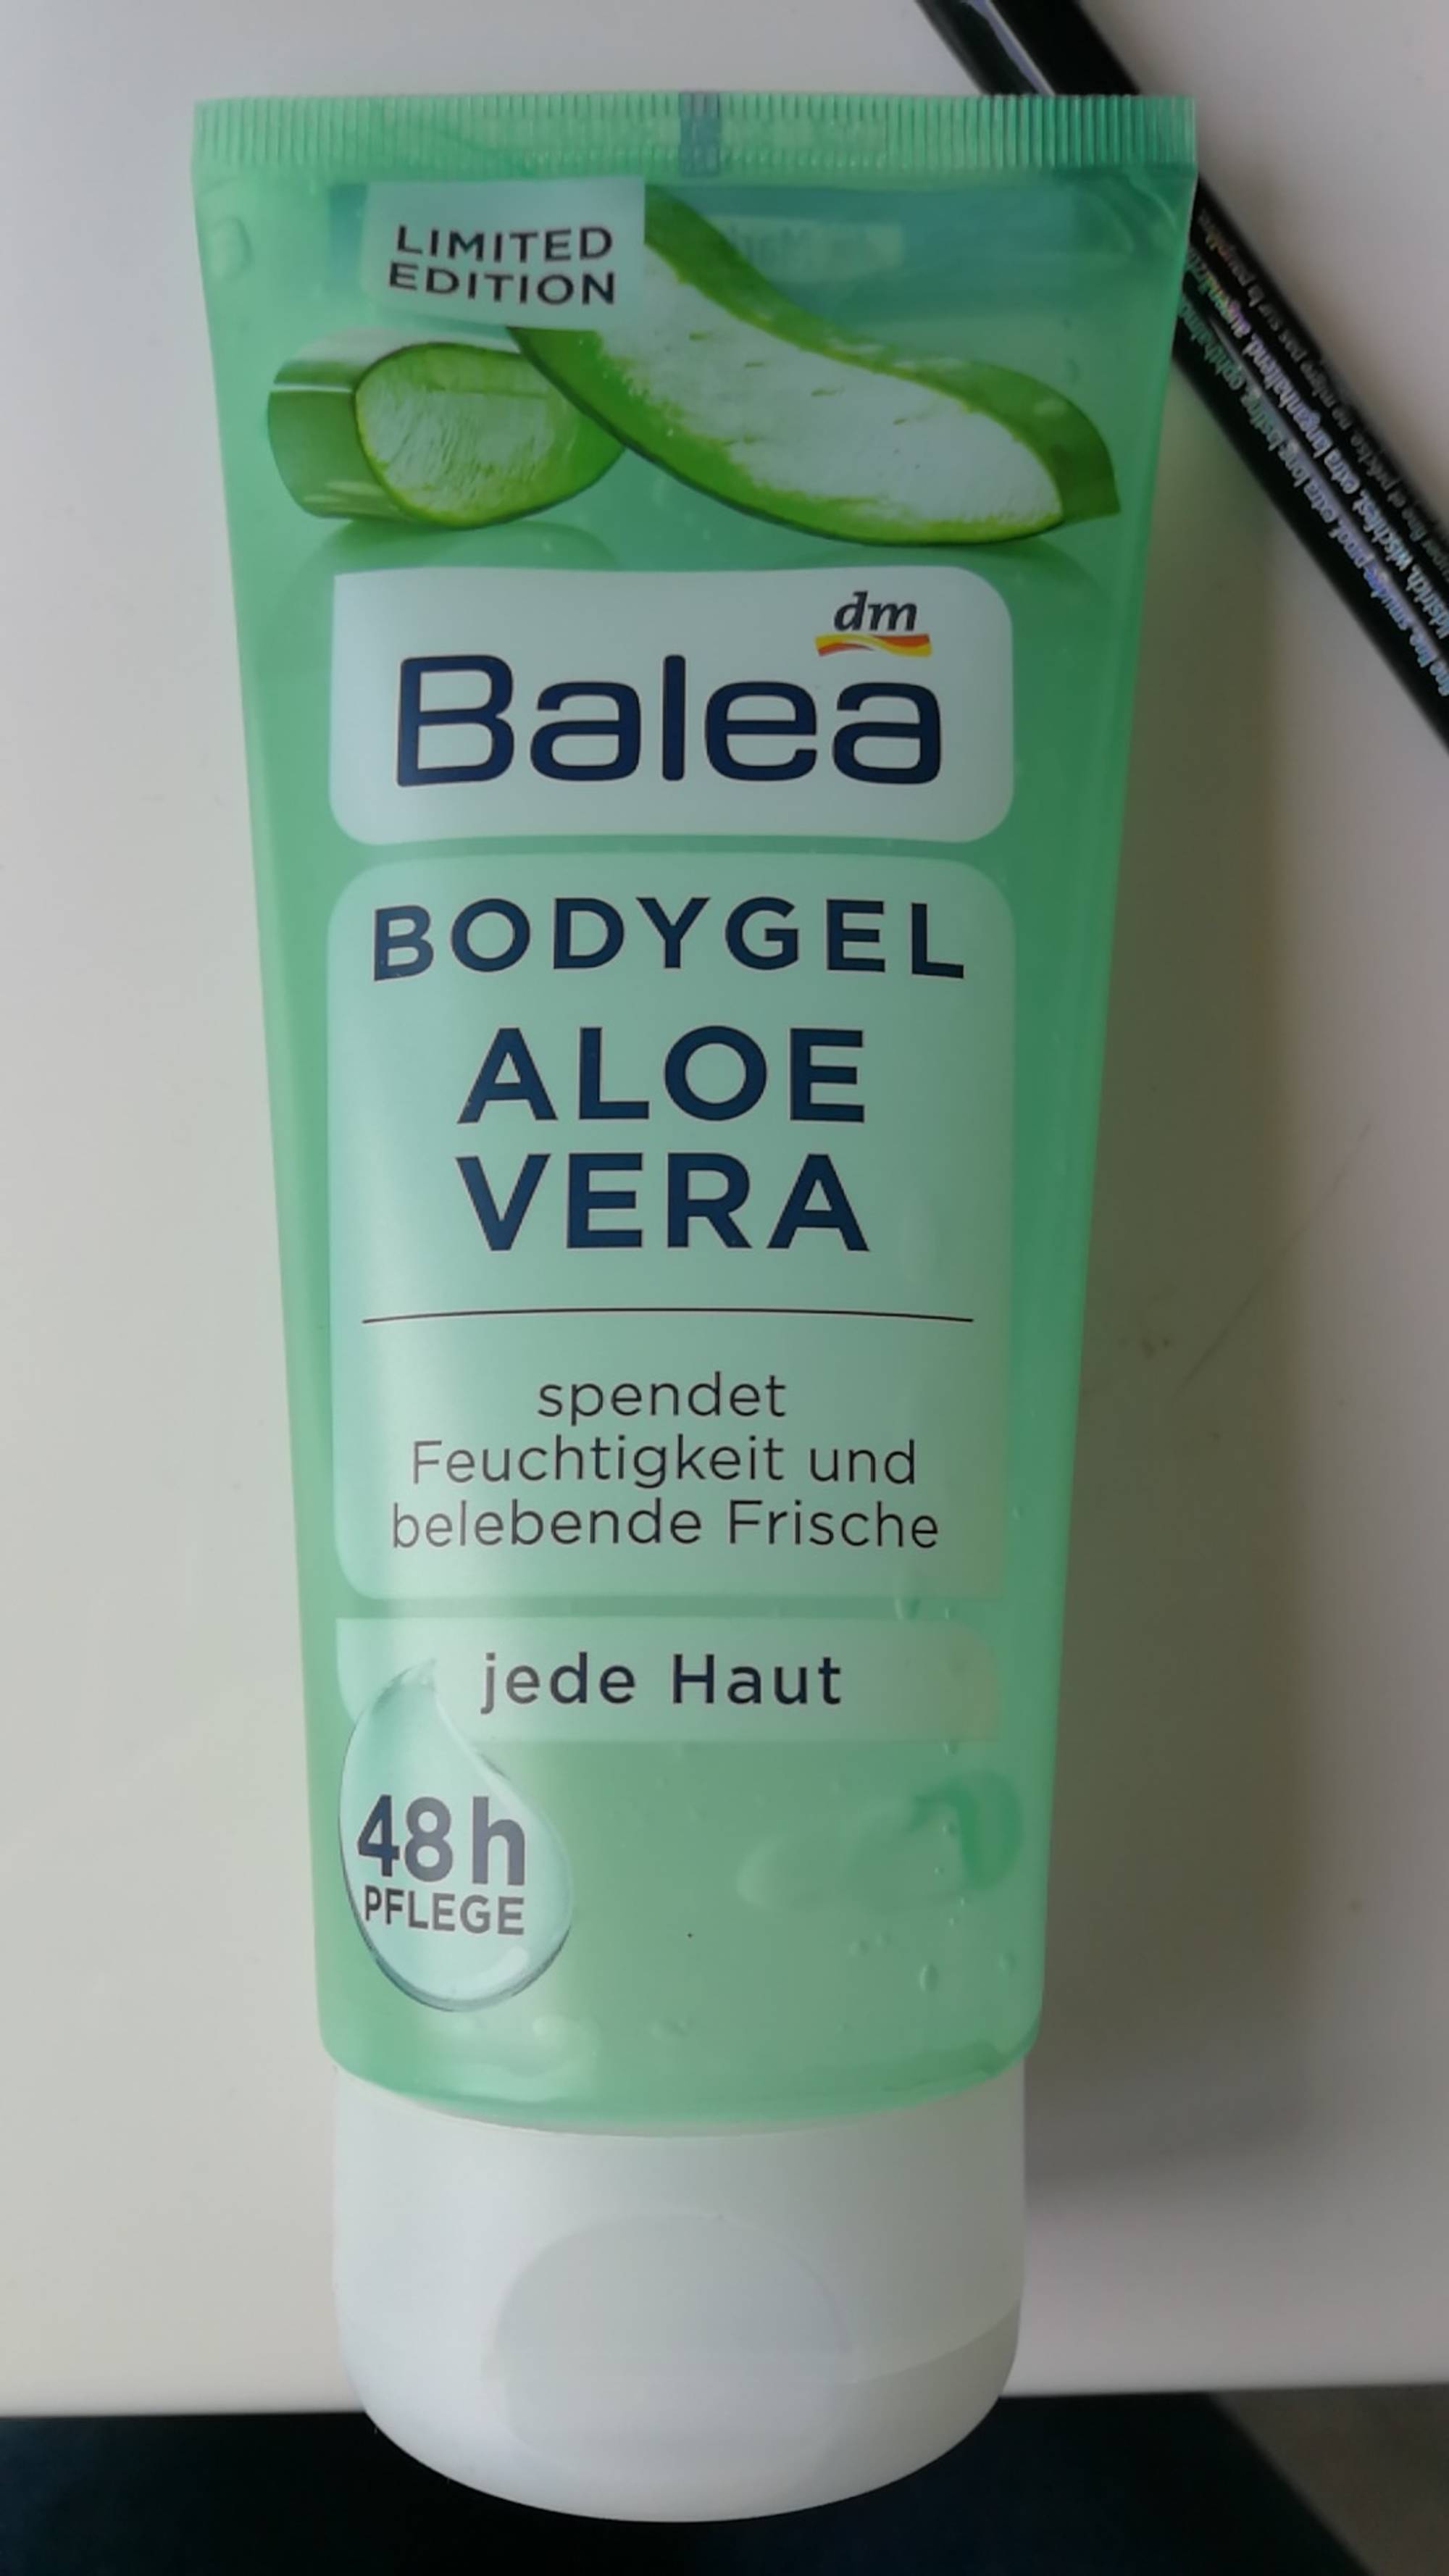 BALEA - Aloe vera - Body gel